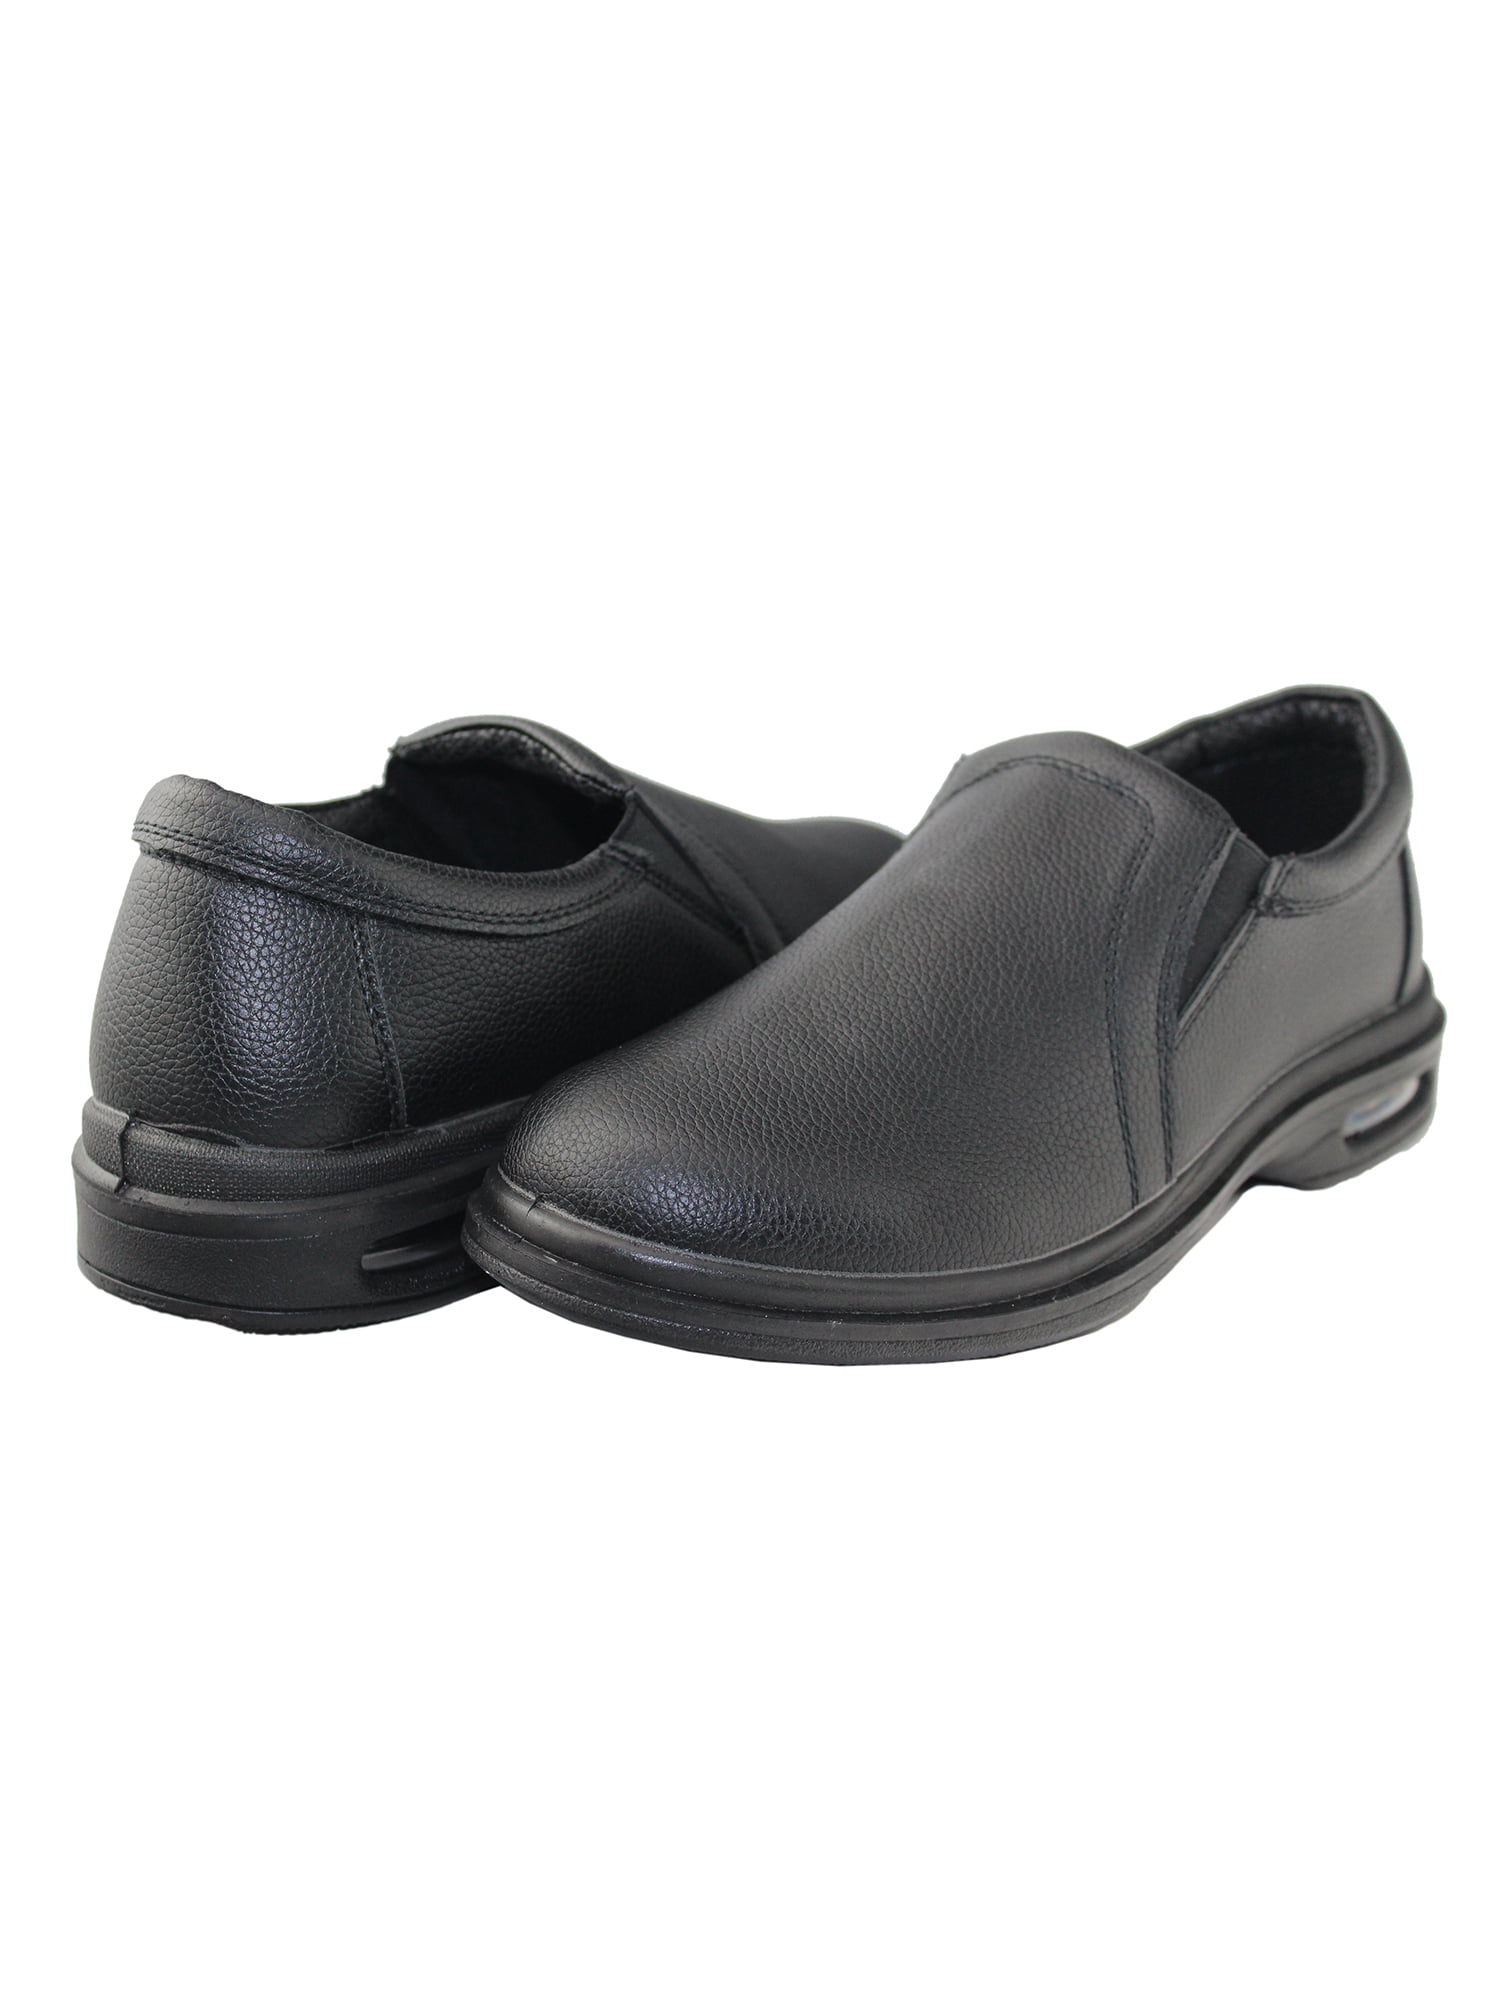 Tanleewa Leather Work Shoes Anti-slip Waterproof Pull-on Casual Shoe Size 6.5 Walmart.com